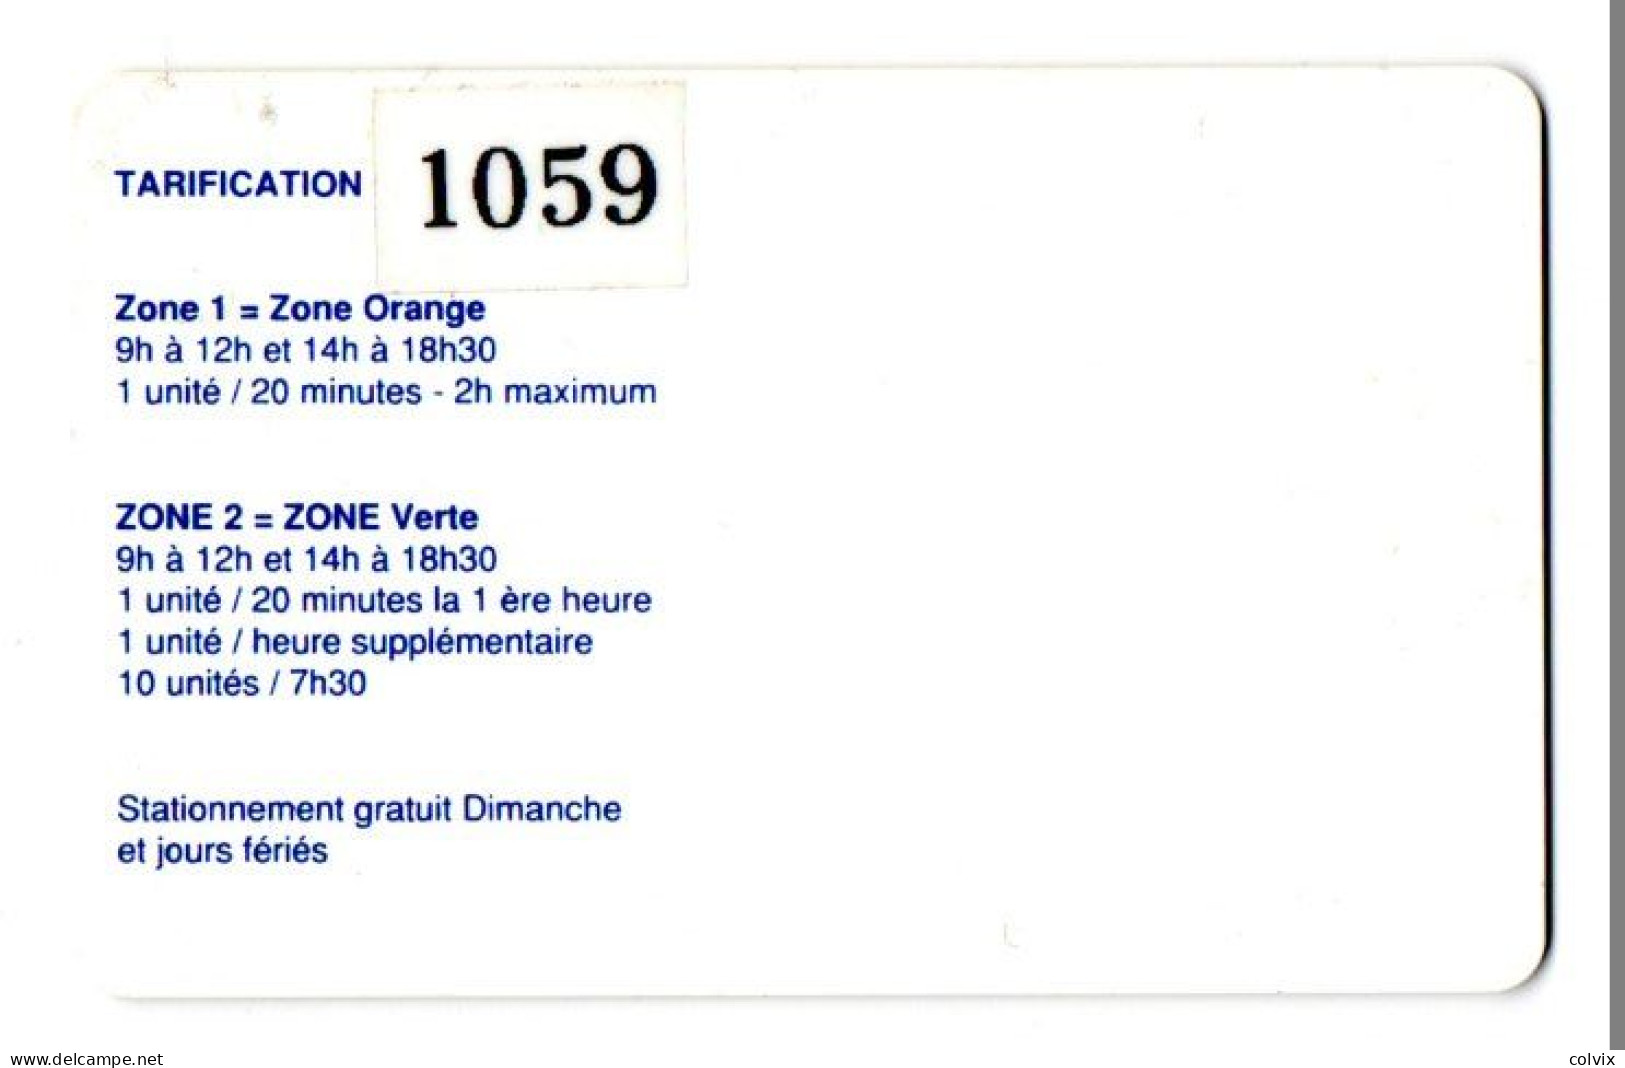 PIAF ROCHEFORT - Ref PIAF 17300-3 200U Date 07/94 1000 Ex LA FAYETTE Avec Autocollant Au Verso - PIAF Parking Cards